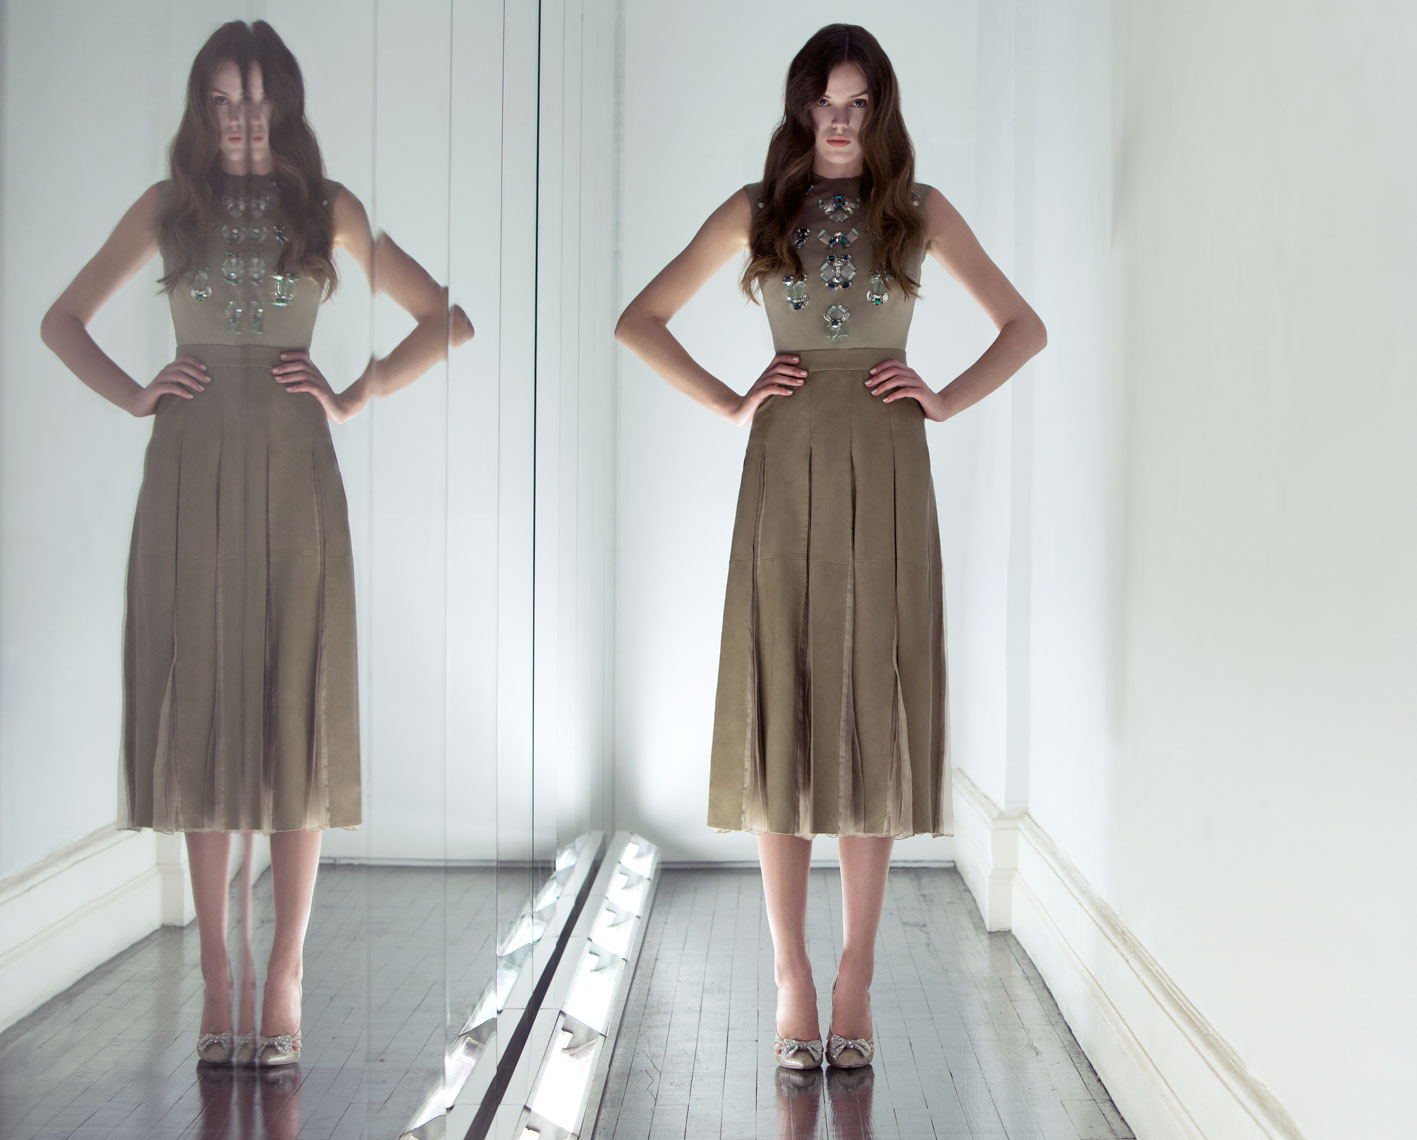 Fashion editorial with New York Model Sarah Joffs in dress